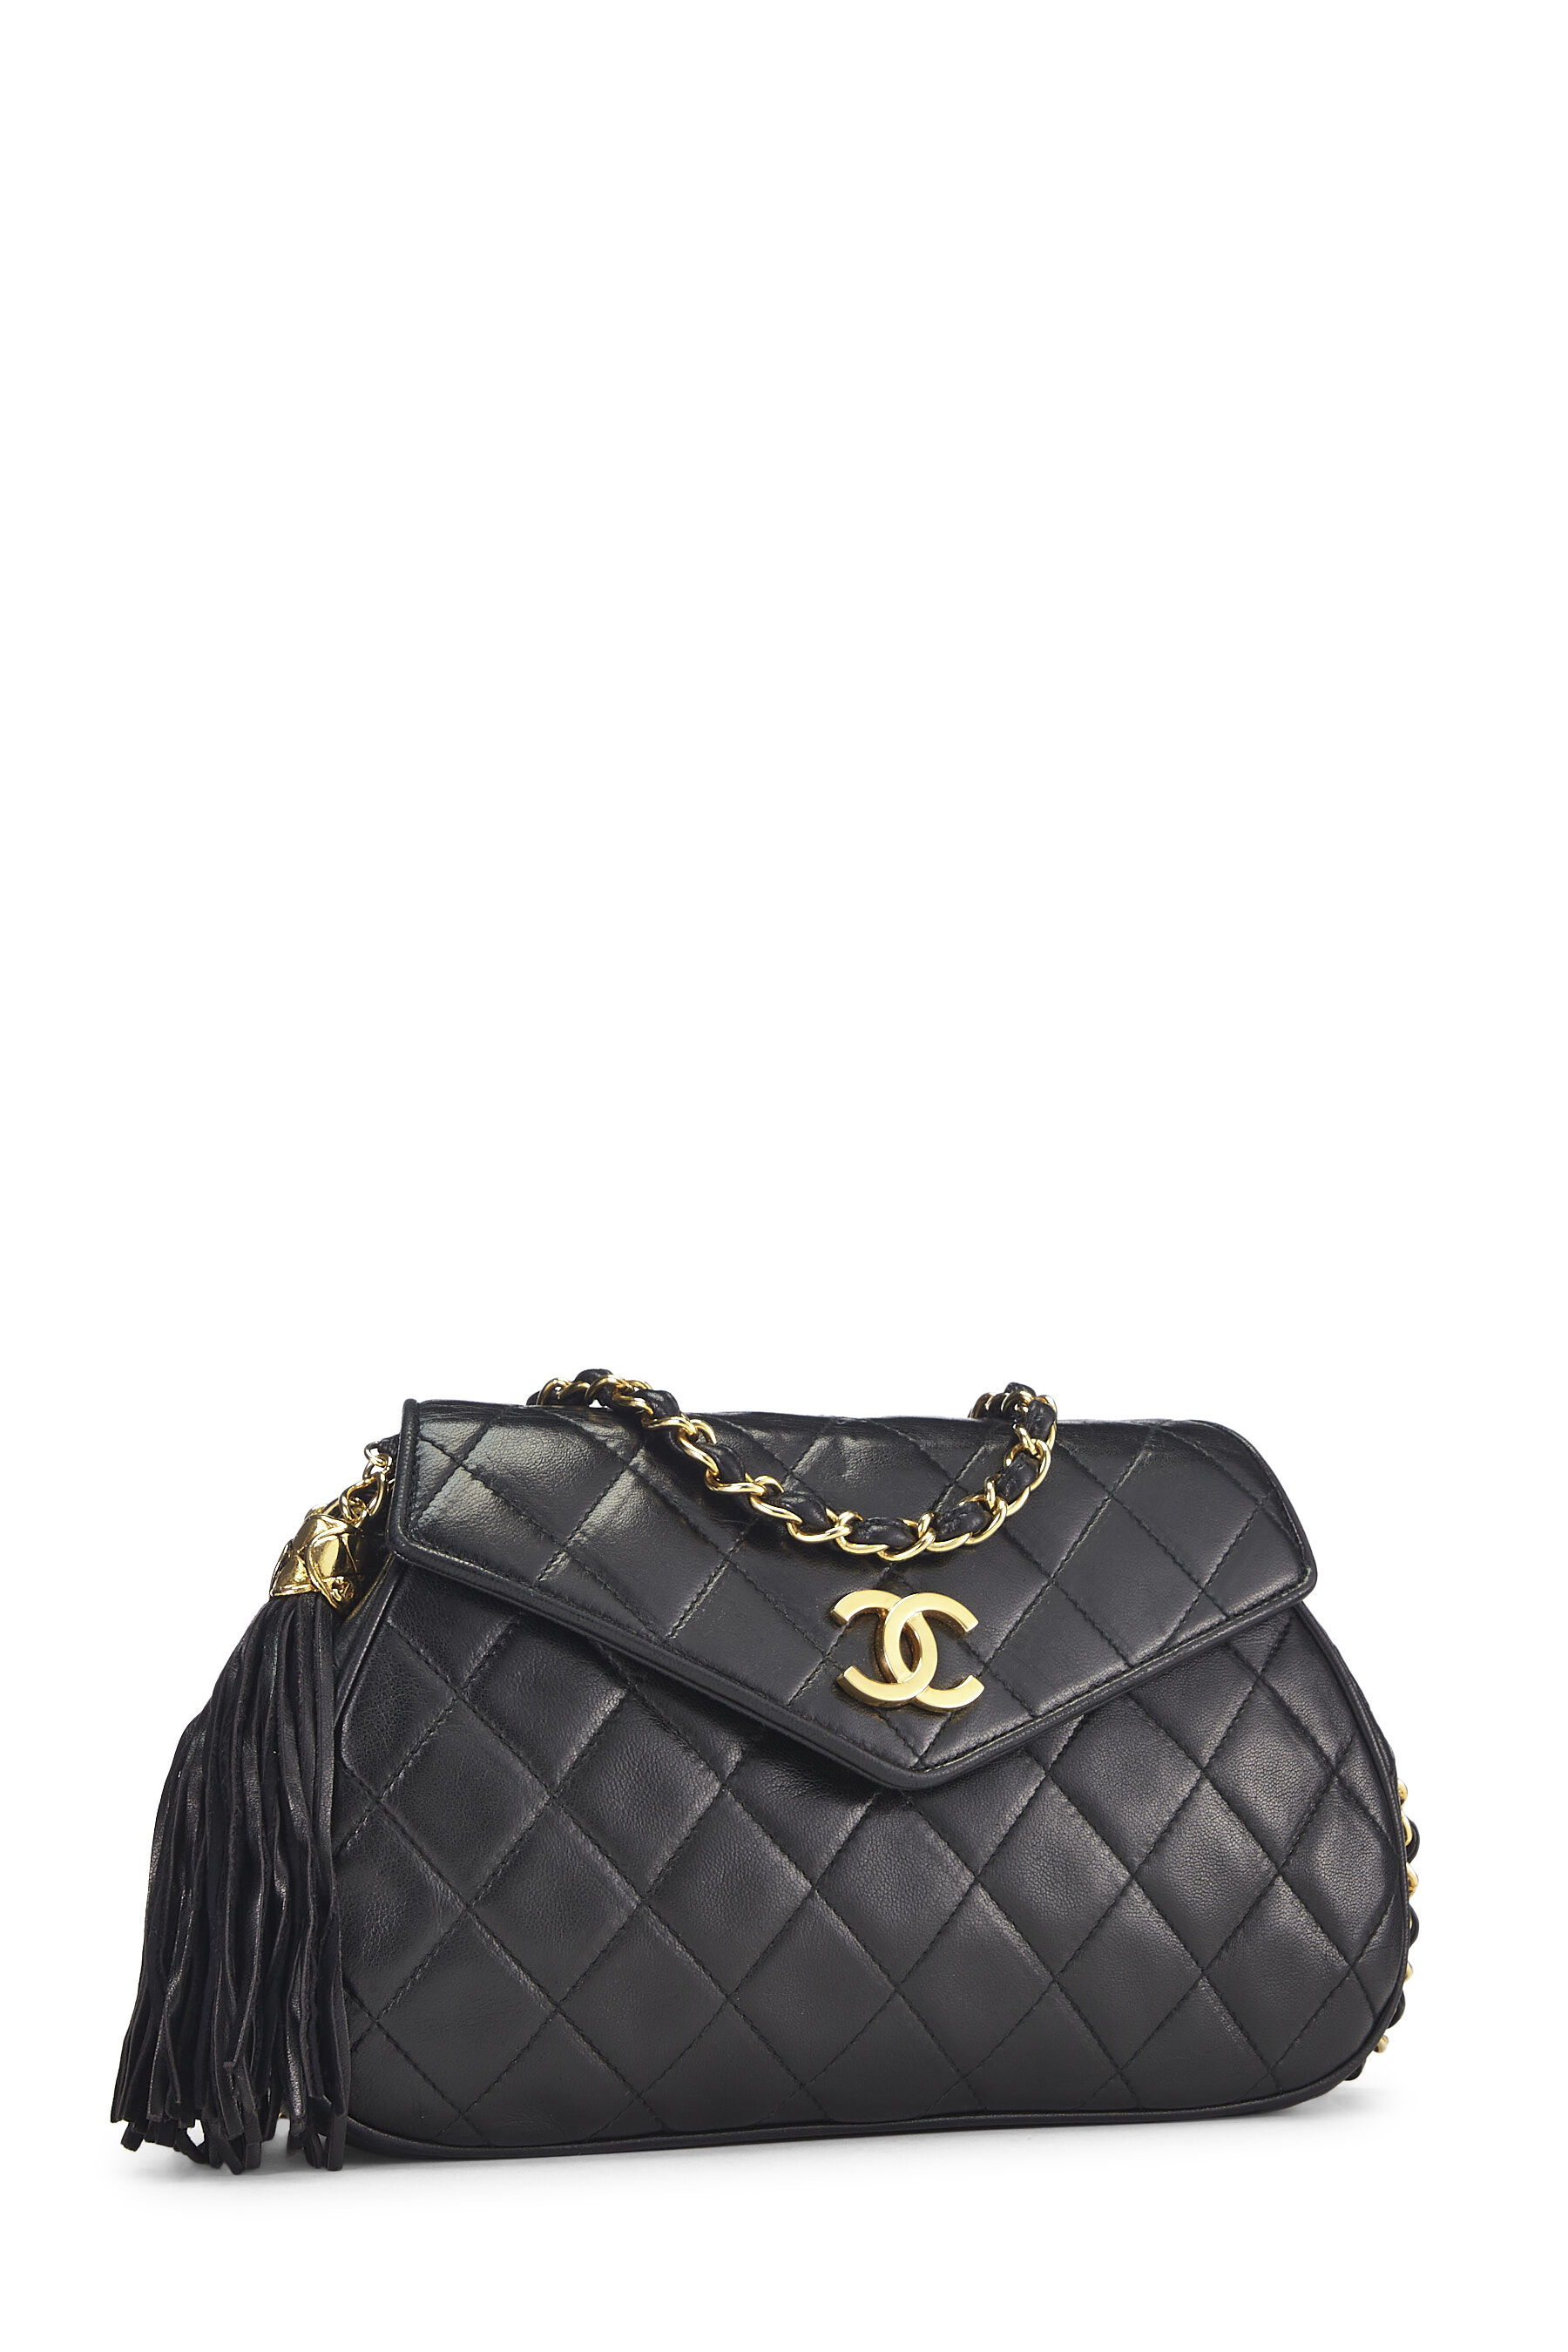 Chanel Black Quilted Lambskin Envelope Flap Medium Q6B15B1IK0006